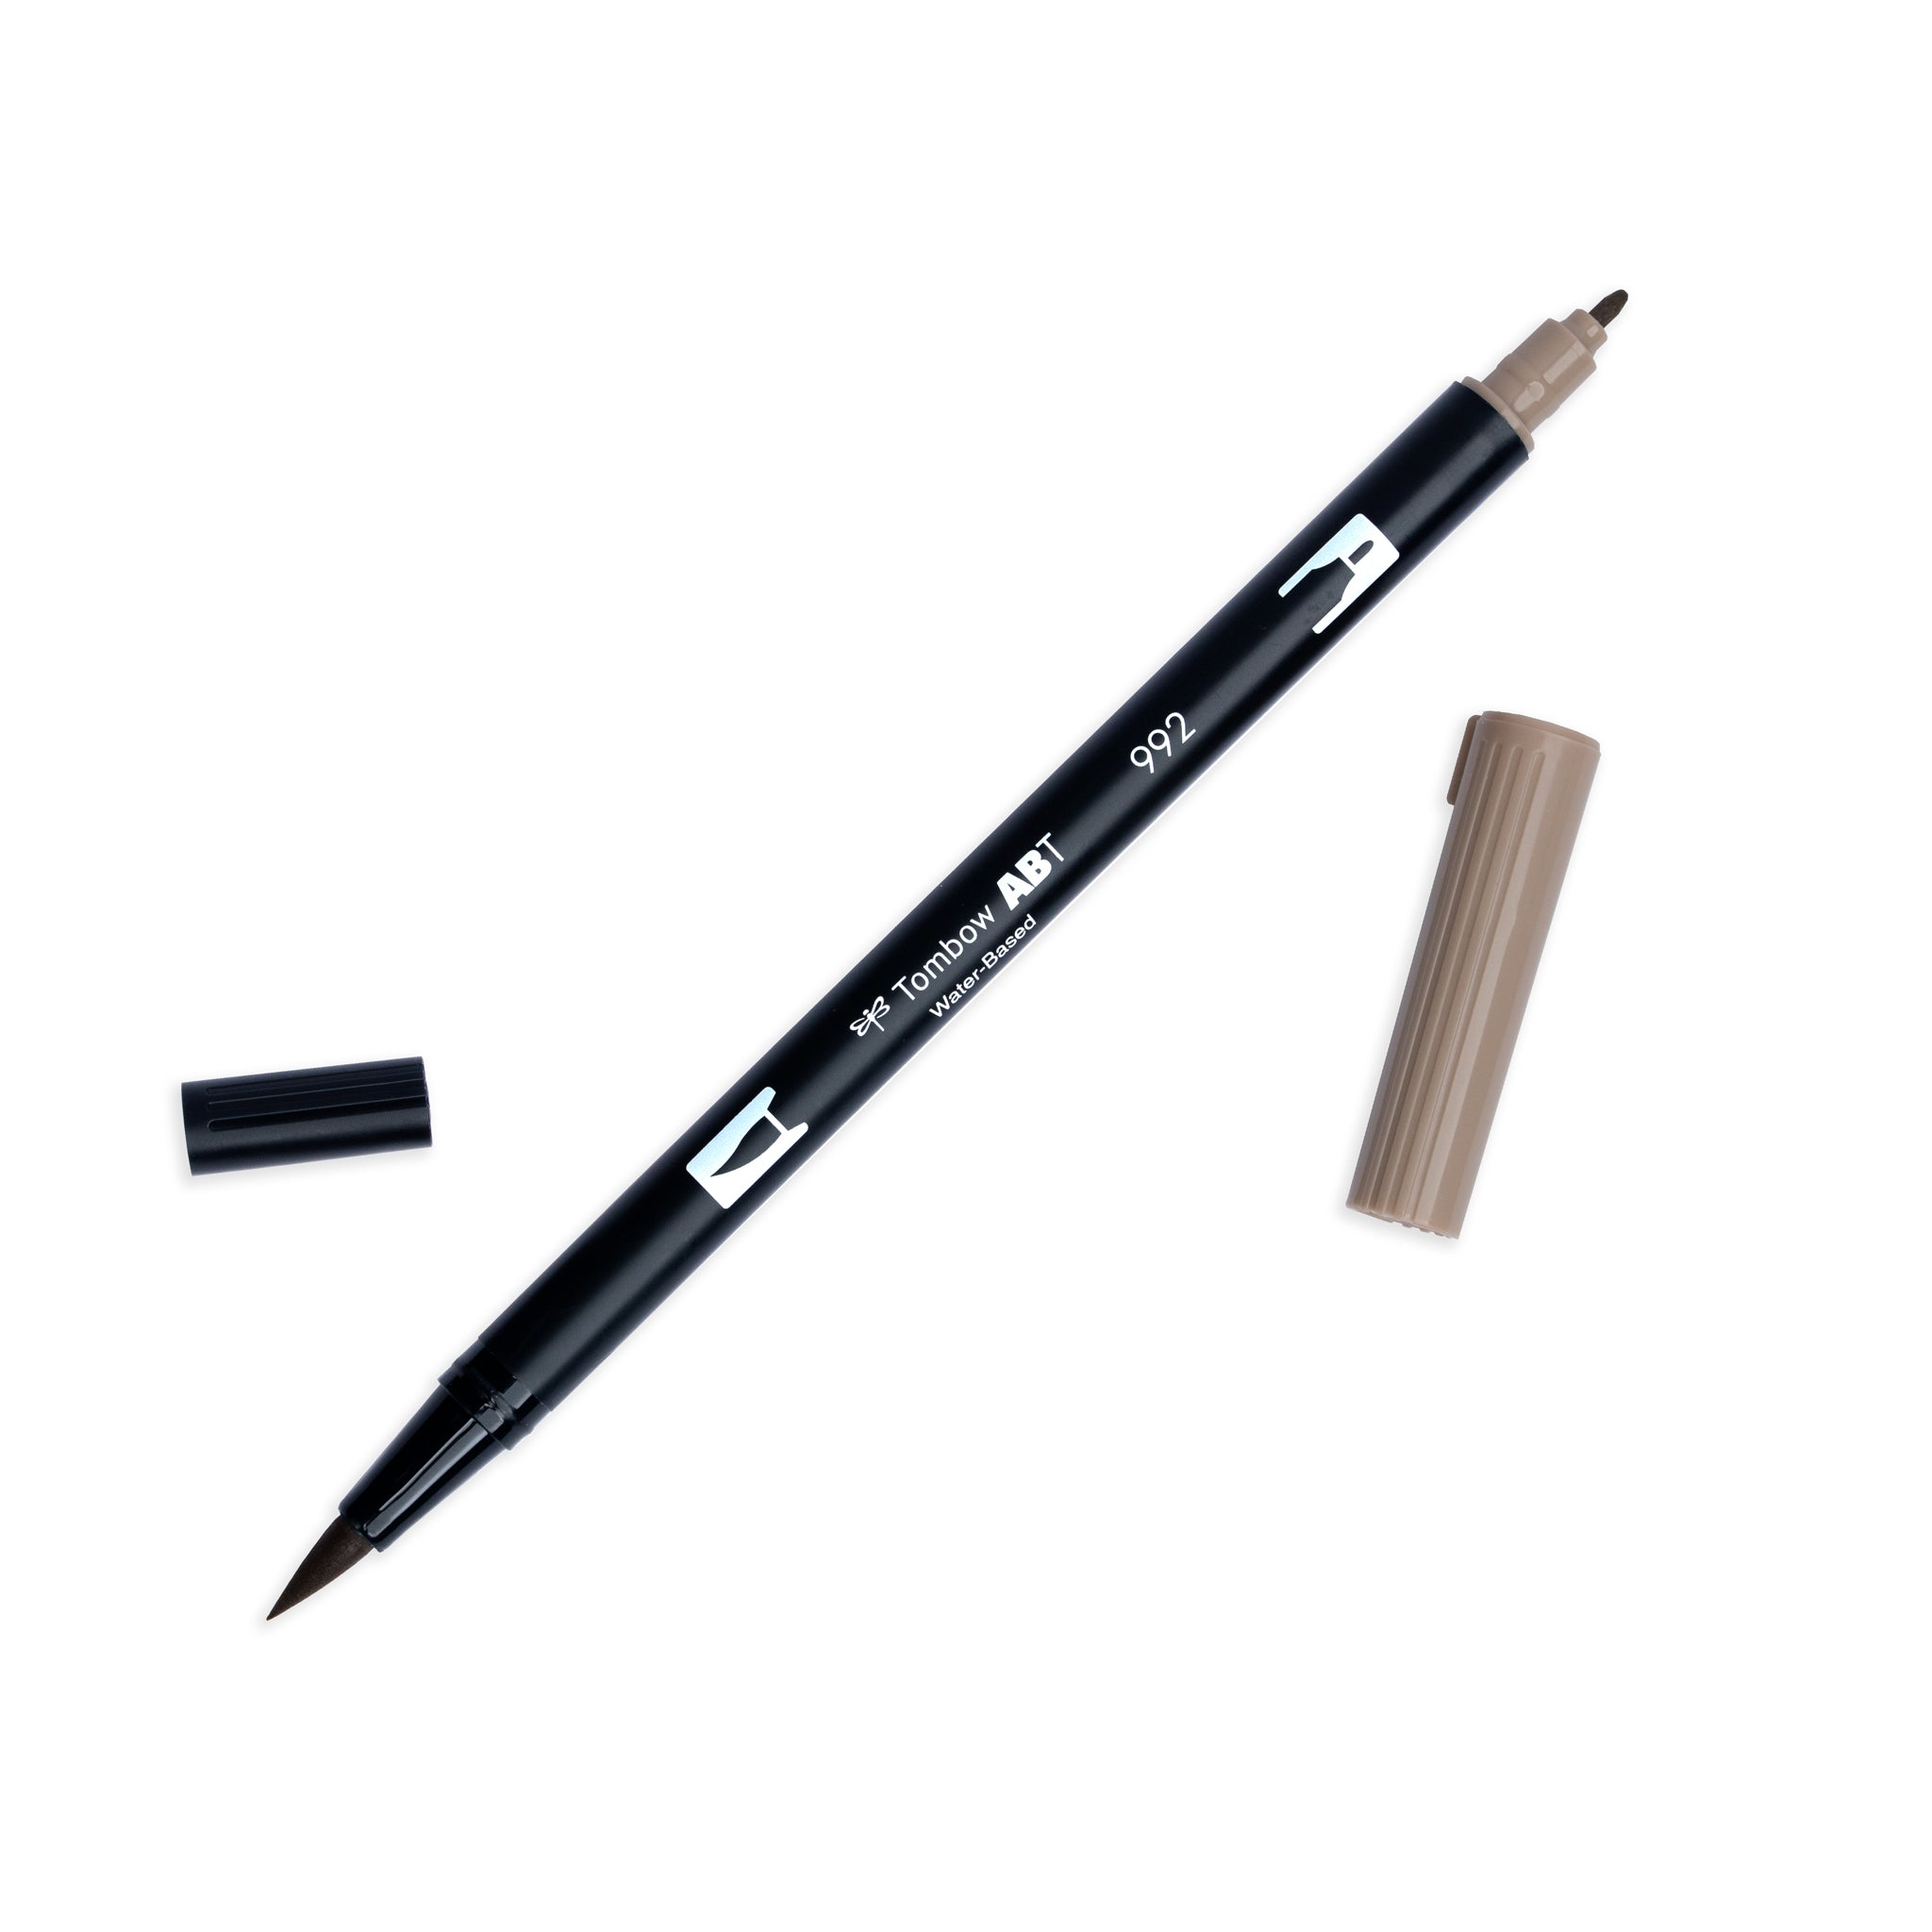 Tombow Dual Brush Pen Review + Blending Tutorial